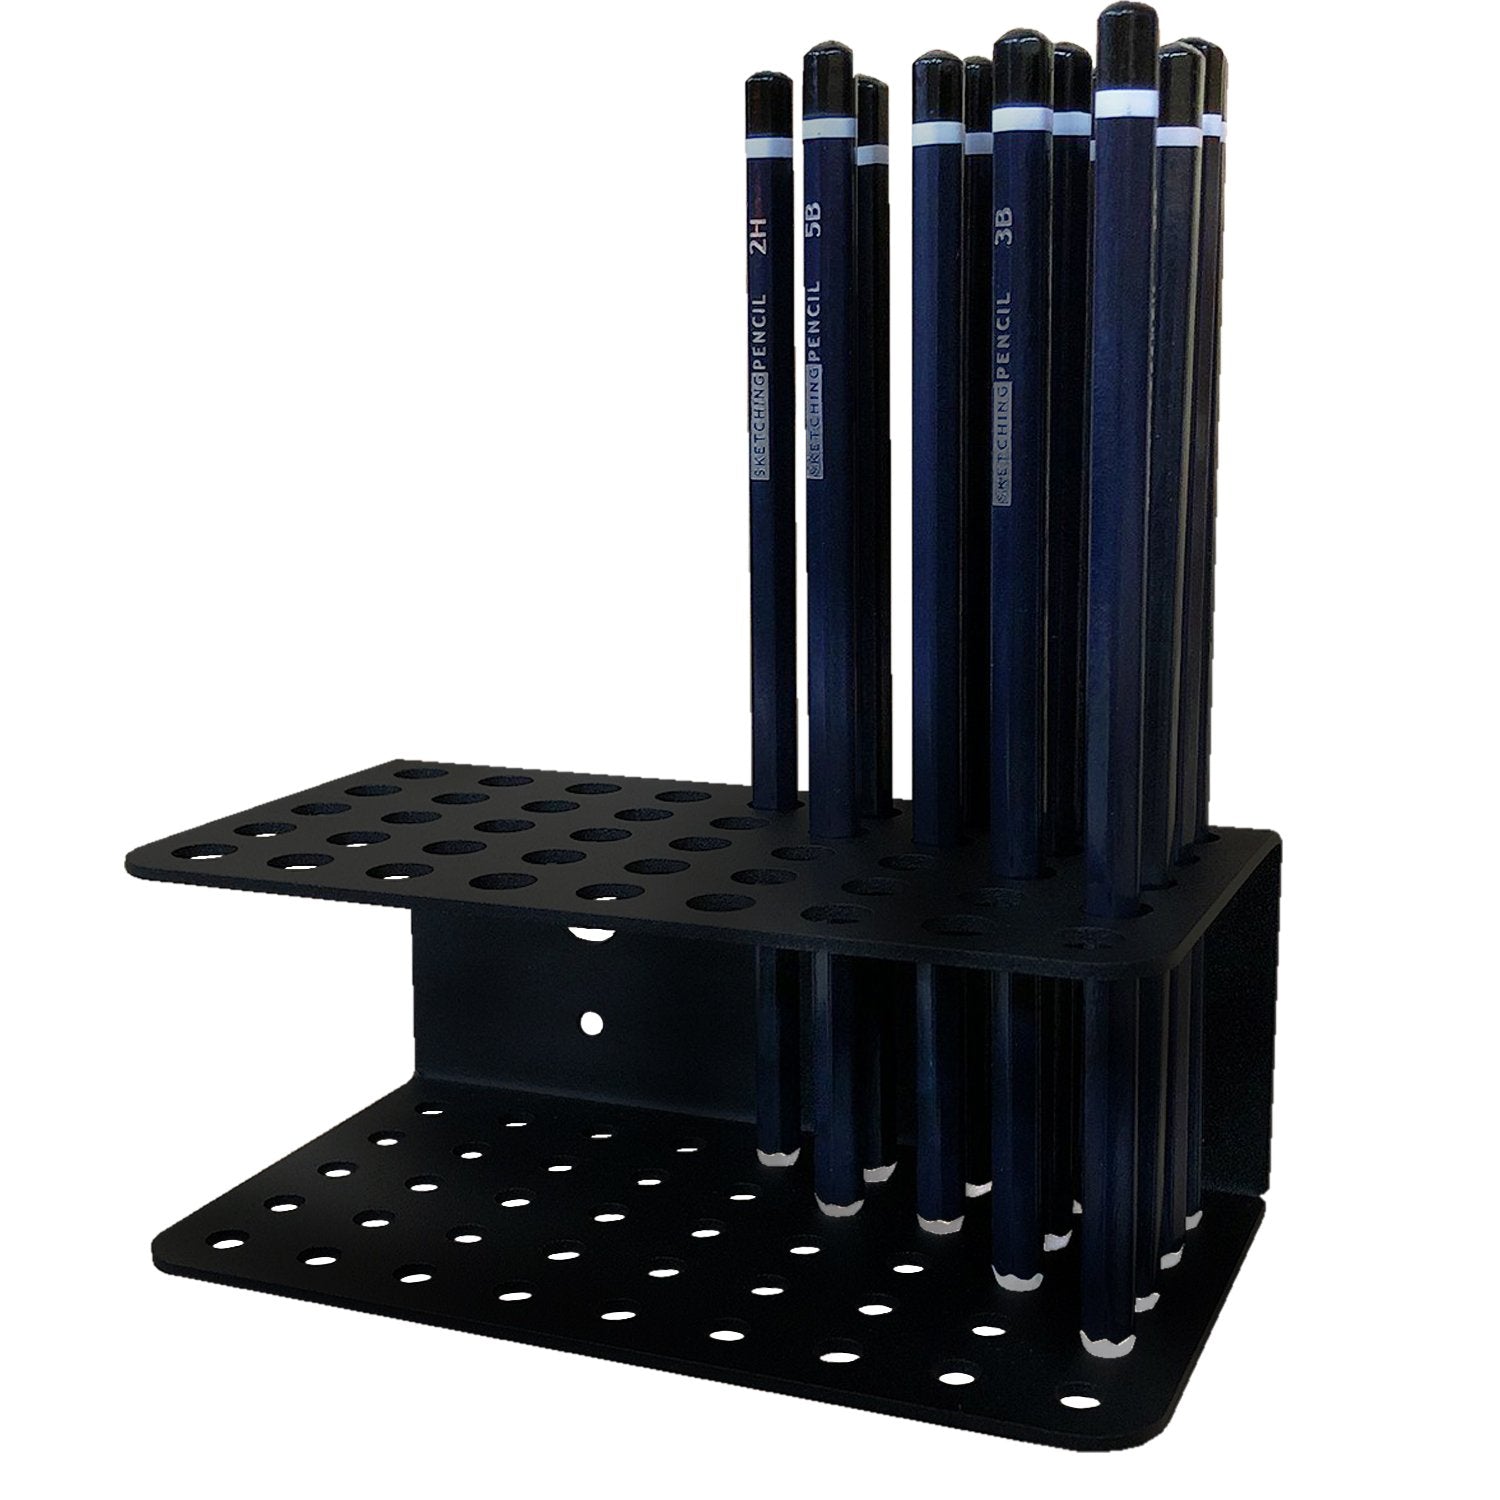 Craftsadora Wall Mountable / Desktop Pencil Storage Holder (45 Slots) - Indoor Outdoors